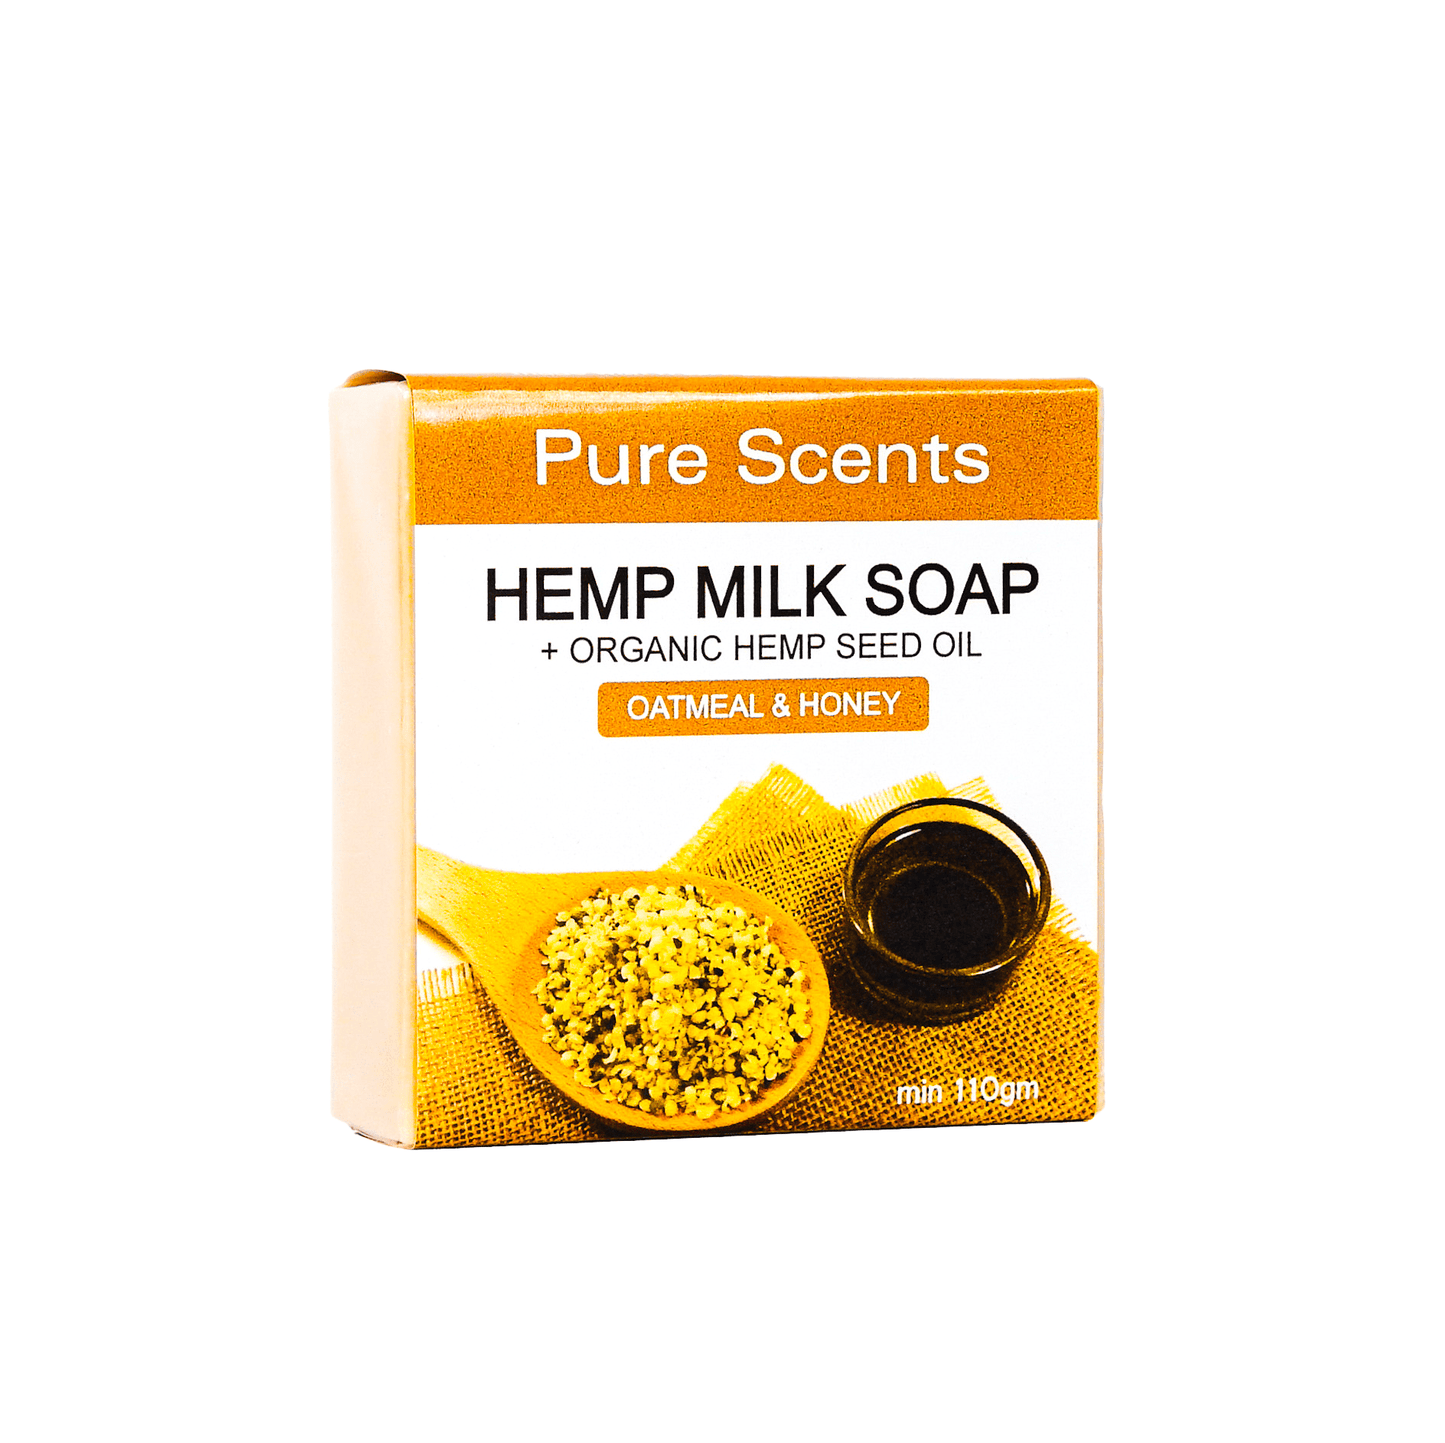 NEW! Hemp Milk Soap - Oatmeal & Honey (Unscented) - Pure Scents